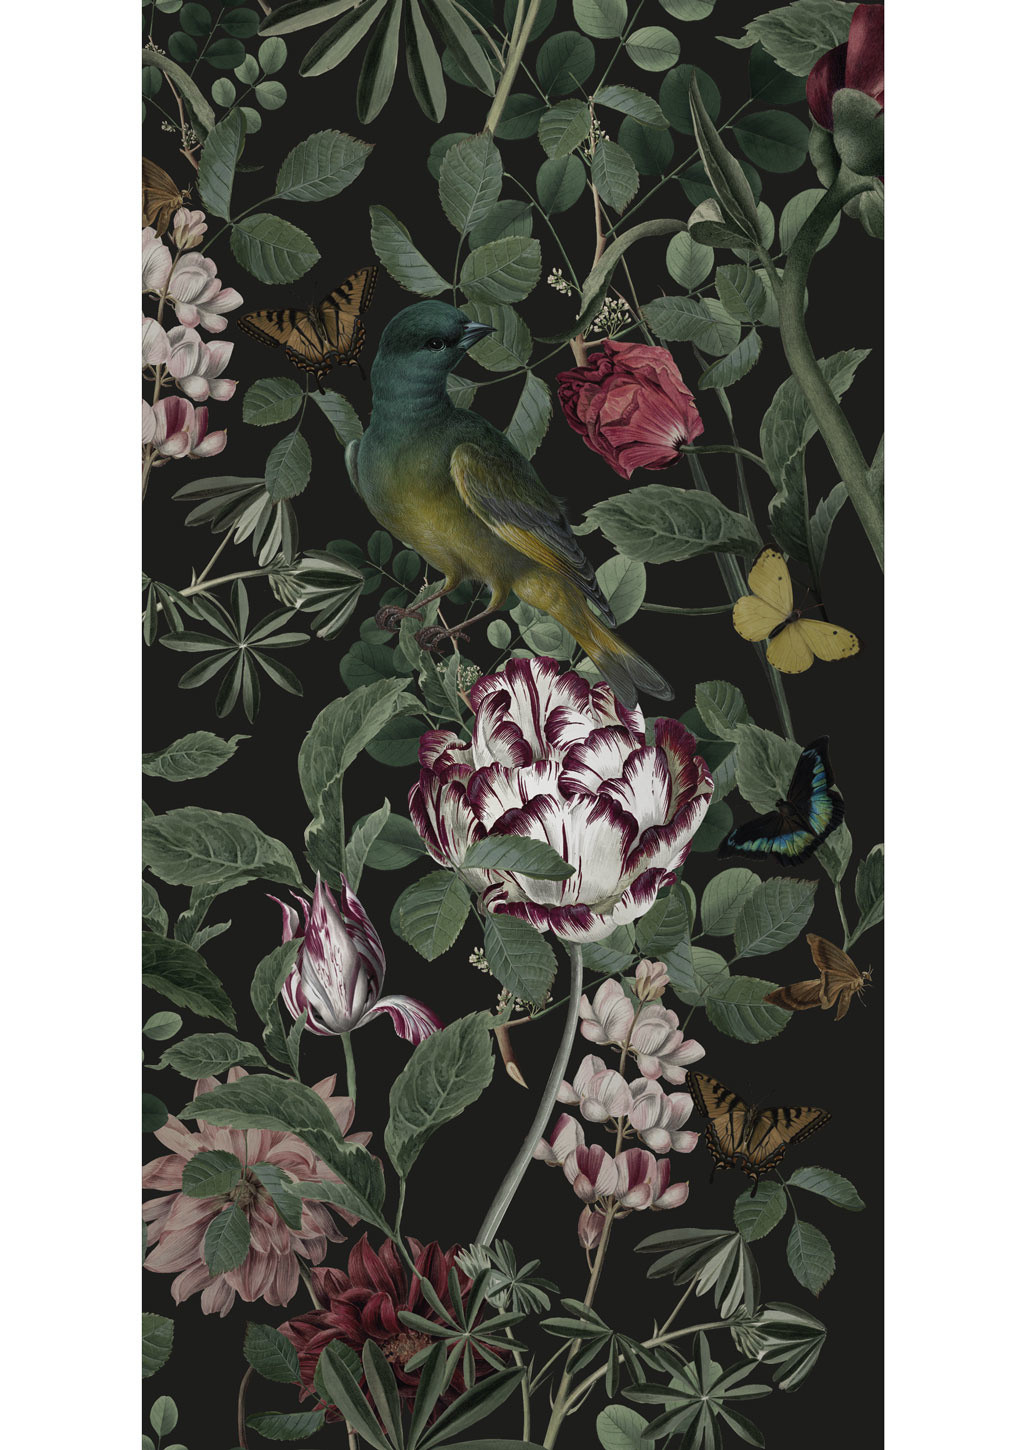 KEK Amsterdam Bold Botanics behang, 97.4 x 280 cm Black-8719743889699-310